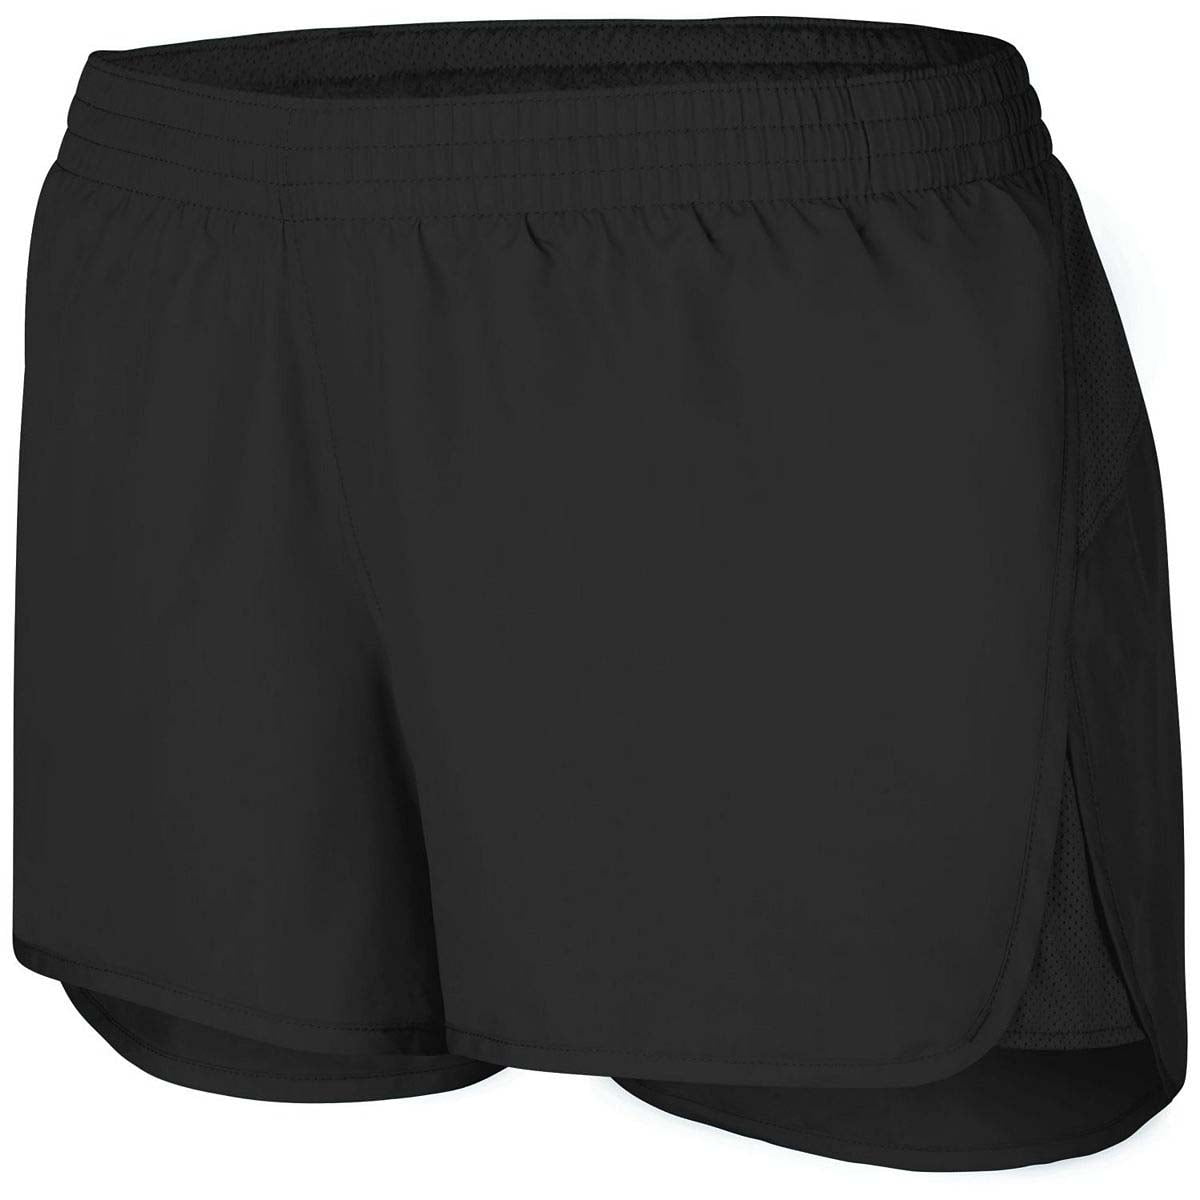 Augusta L Girls Wayfarer Shorts Black 2431 - Walmart.com